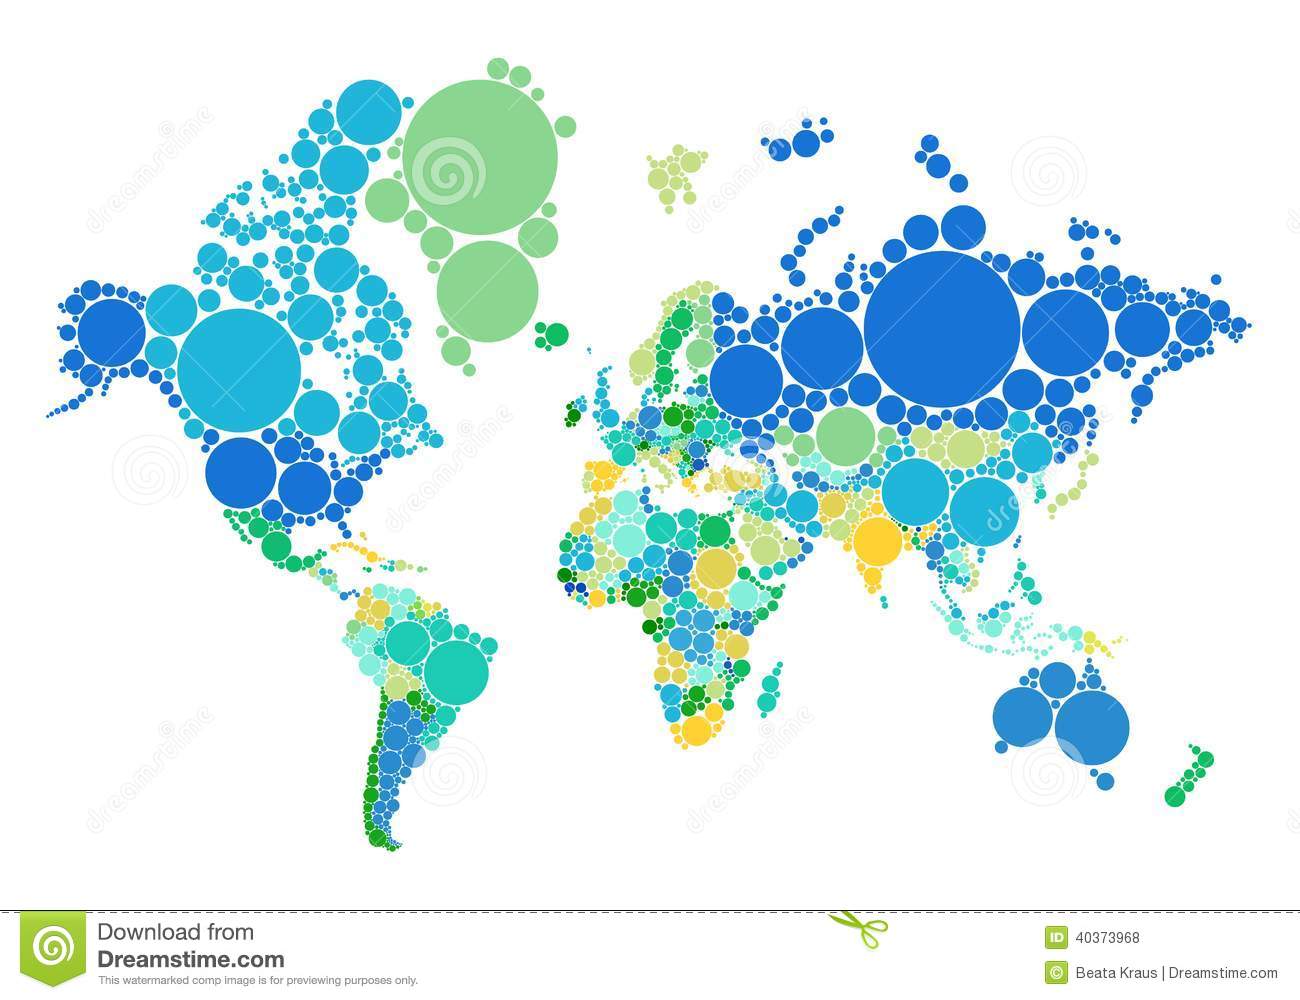 Public-Domain World Map